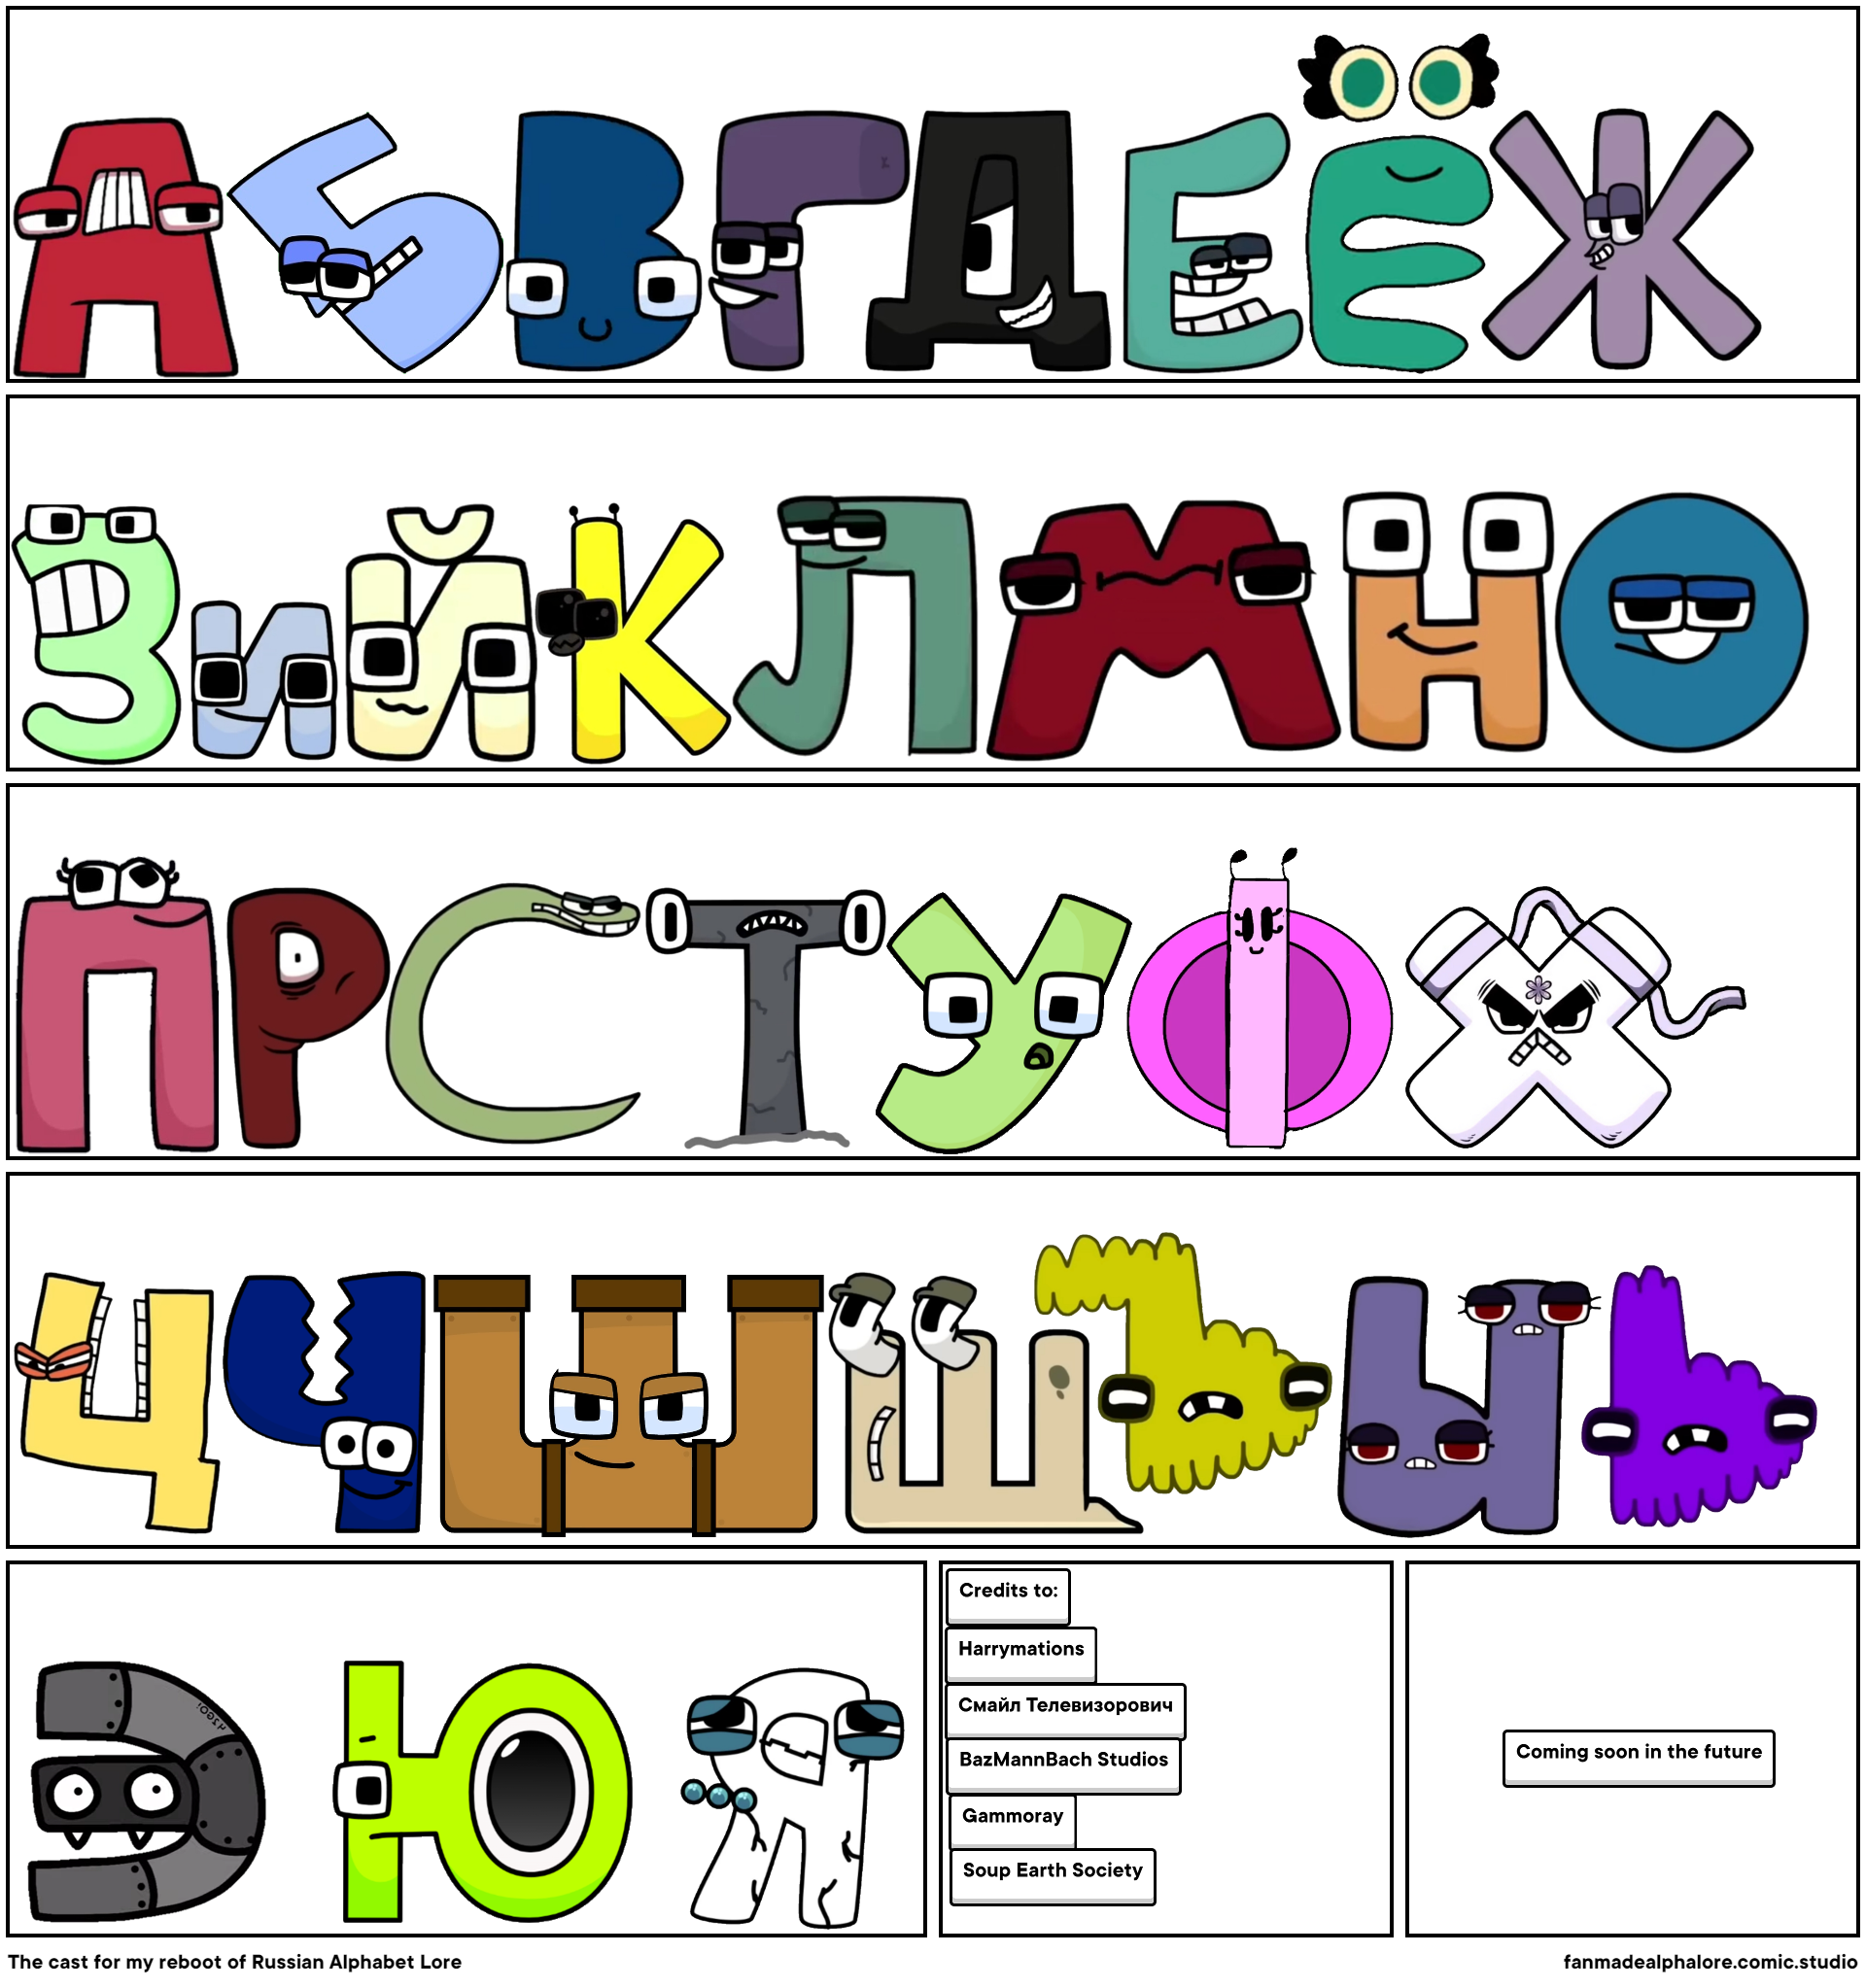 Harrymations Russian alphabet lore - Comic Studio